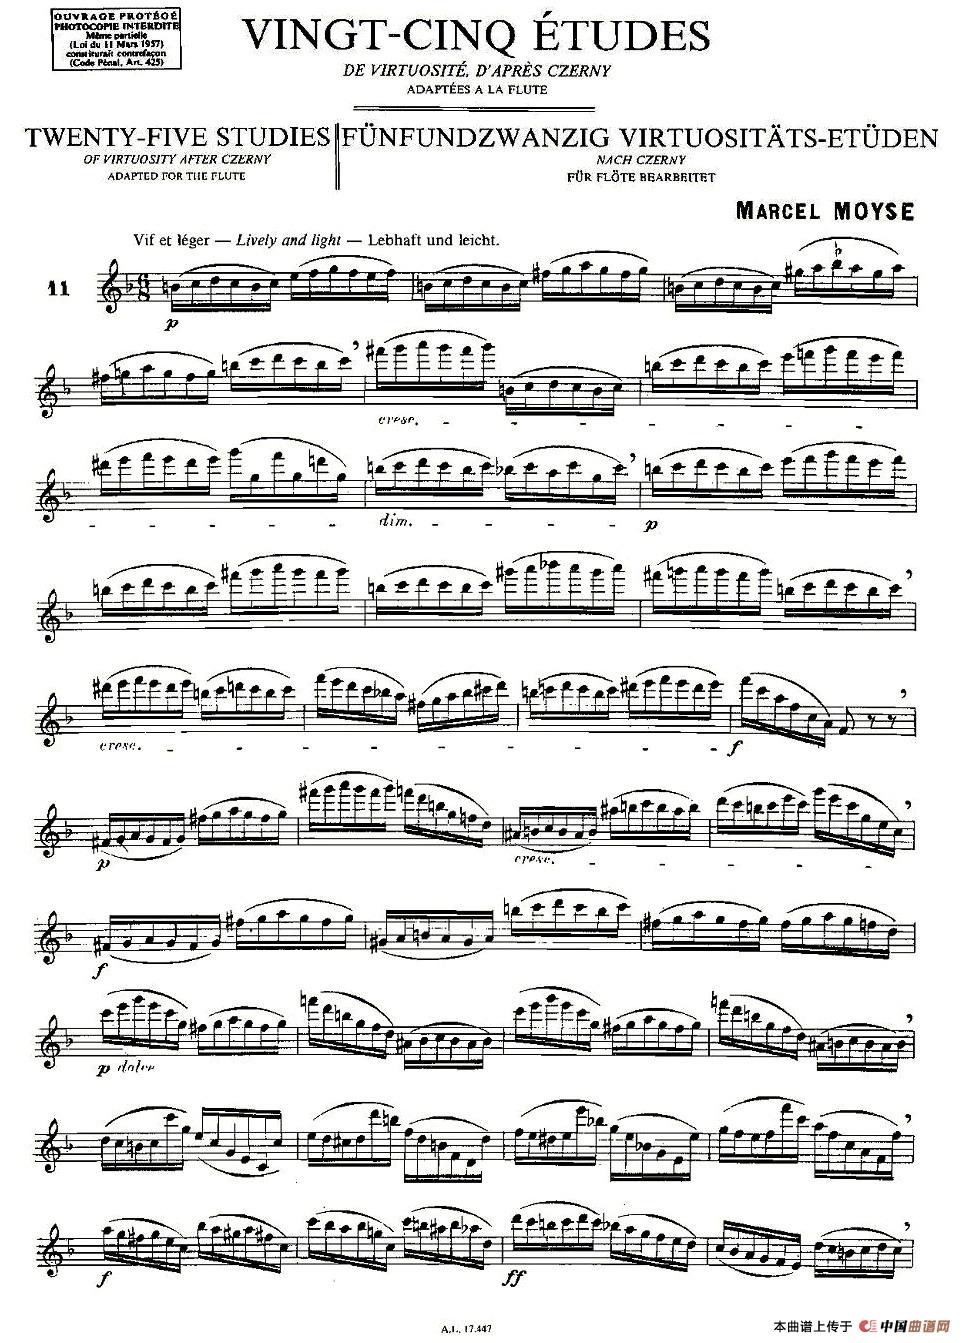 Moyse - 25 Studies after Czerny flute  [11]（25首改编自车